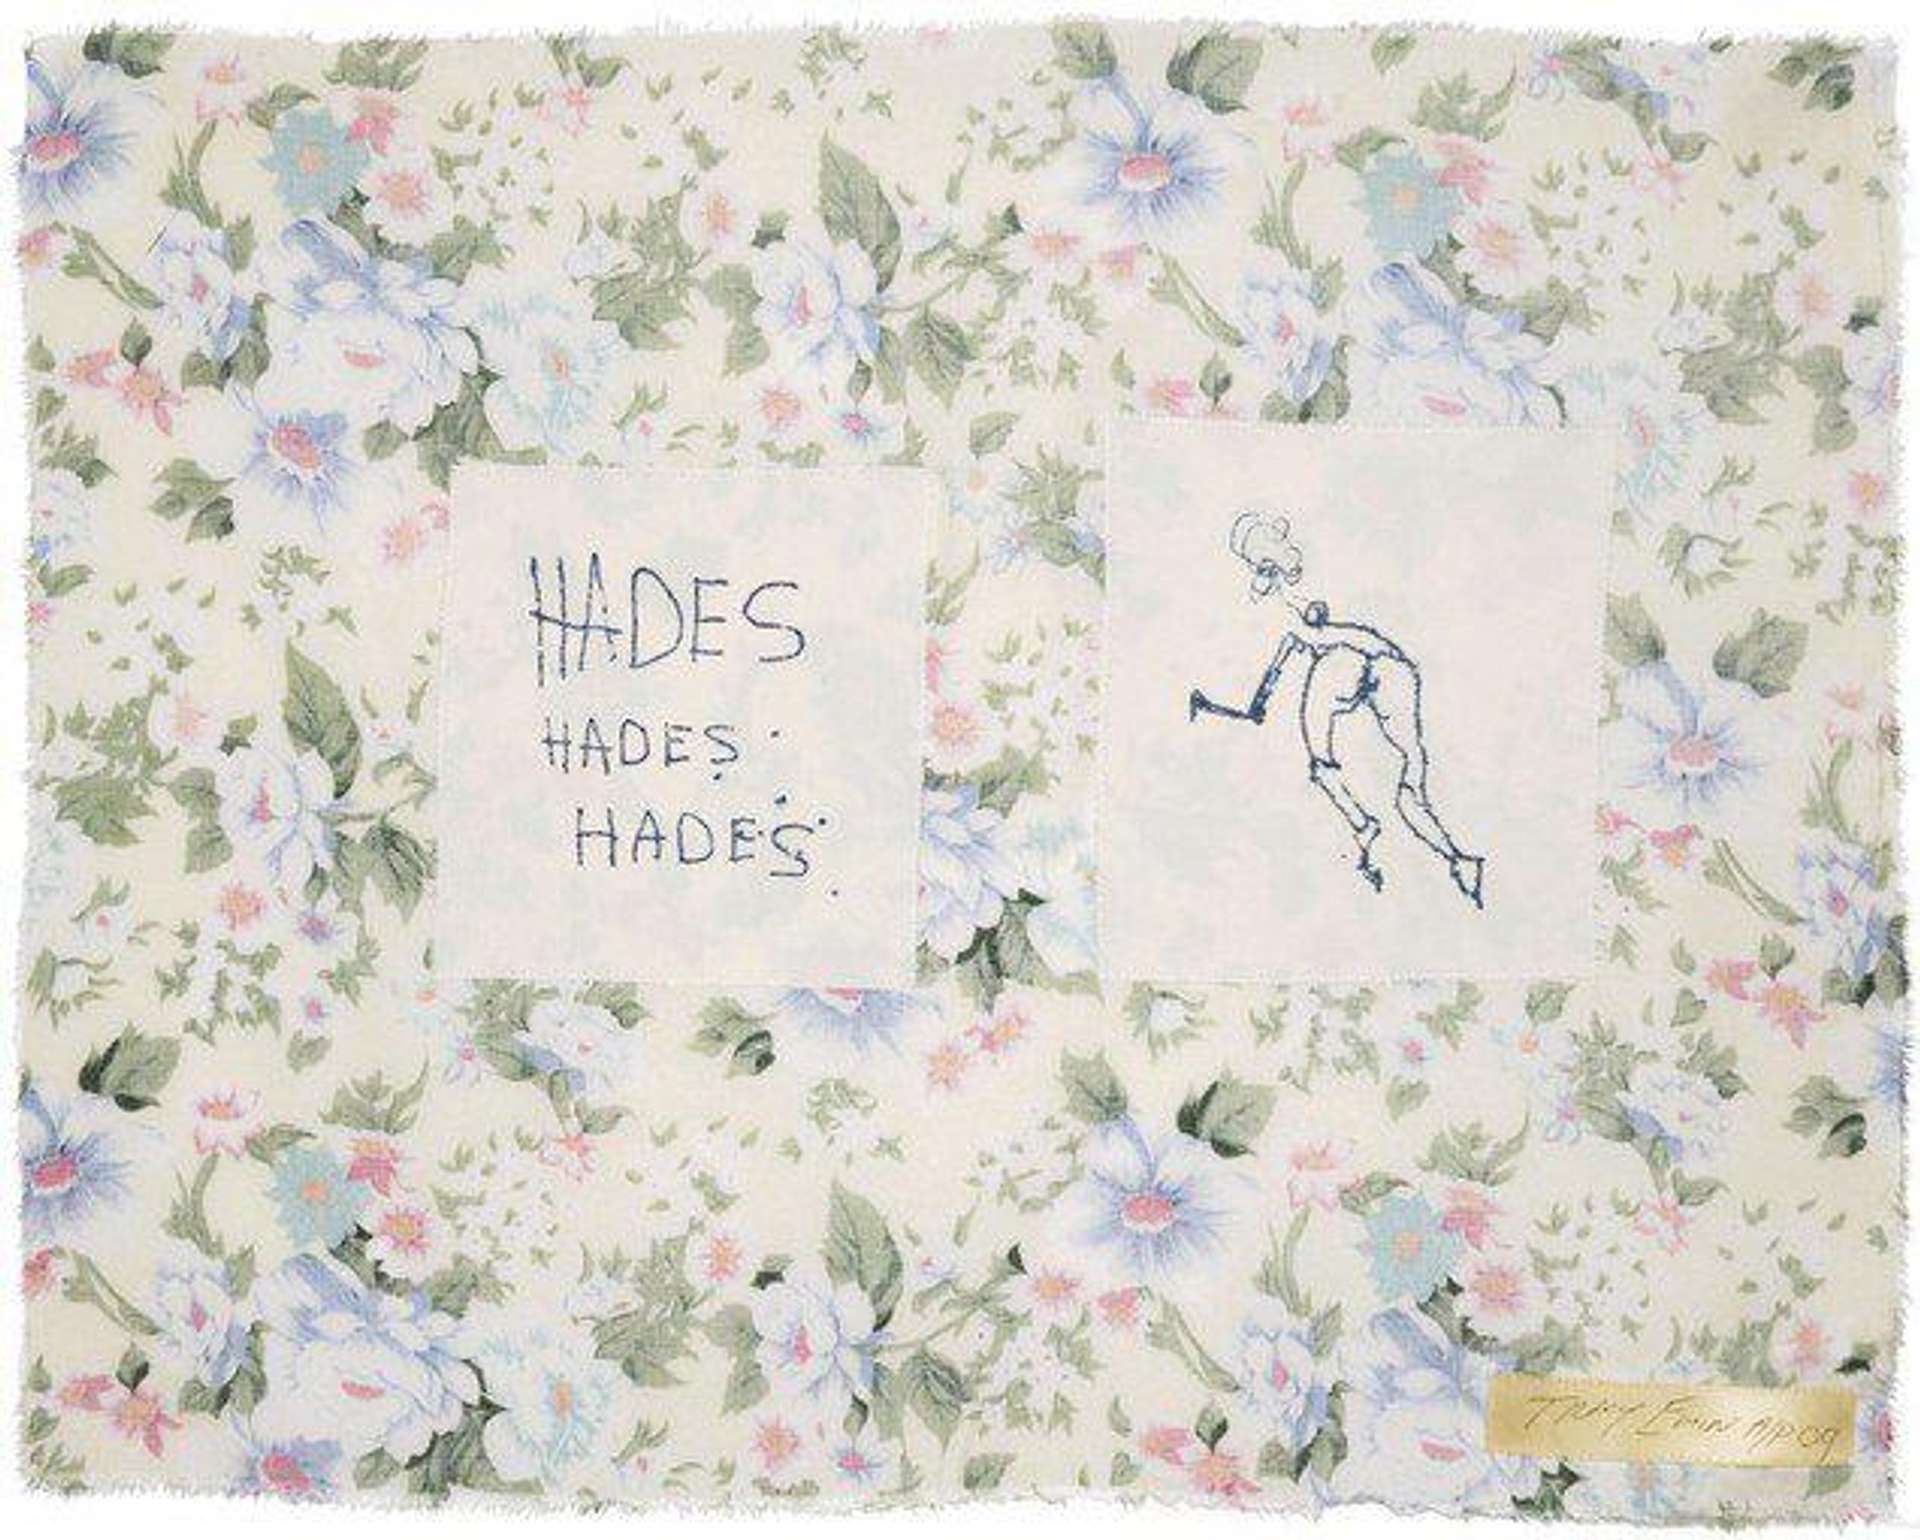 Hades, Hades, Hades - Signed Print by Tracey Emin 2009 - MyArtBroker